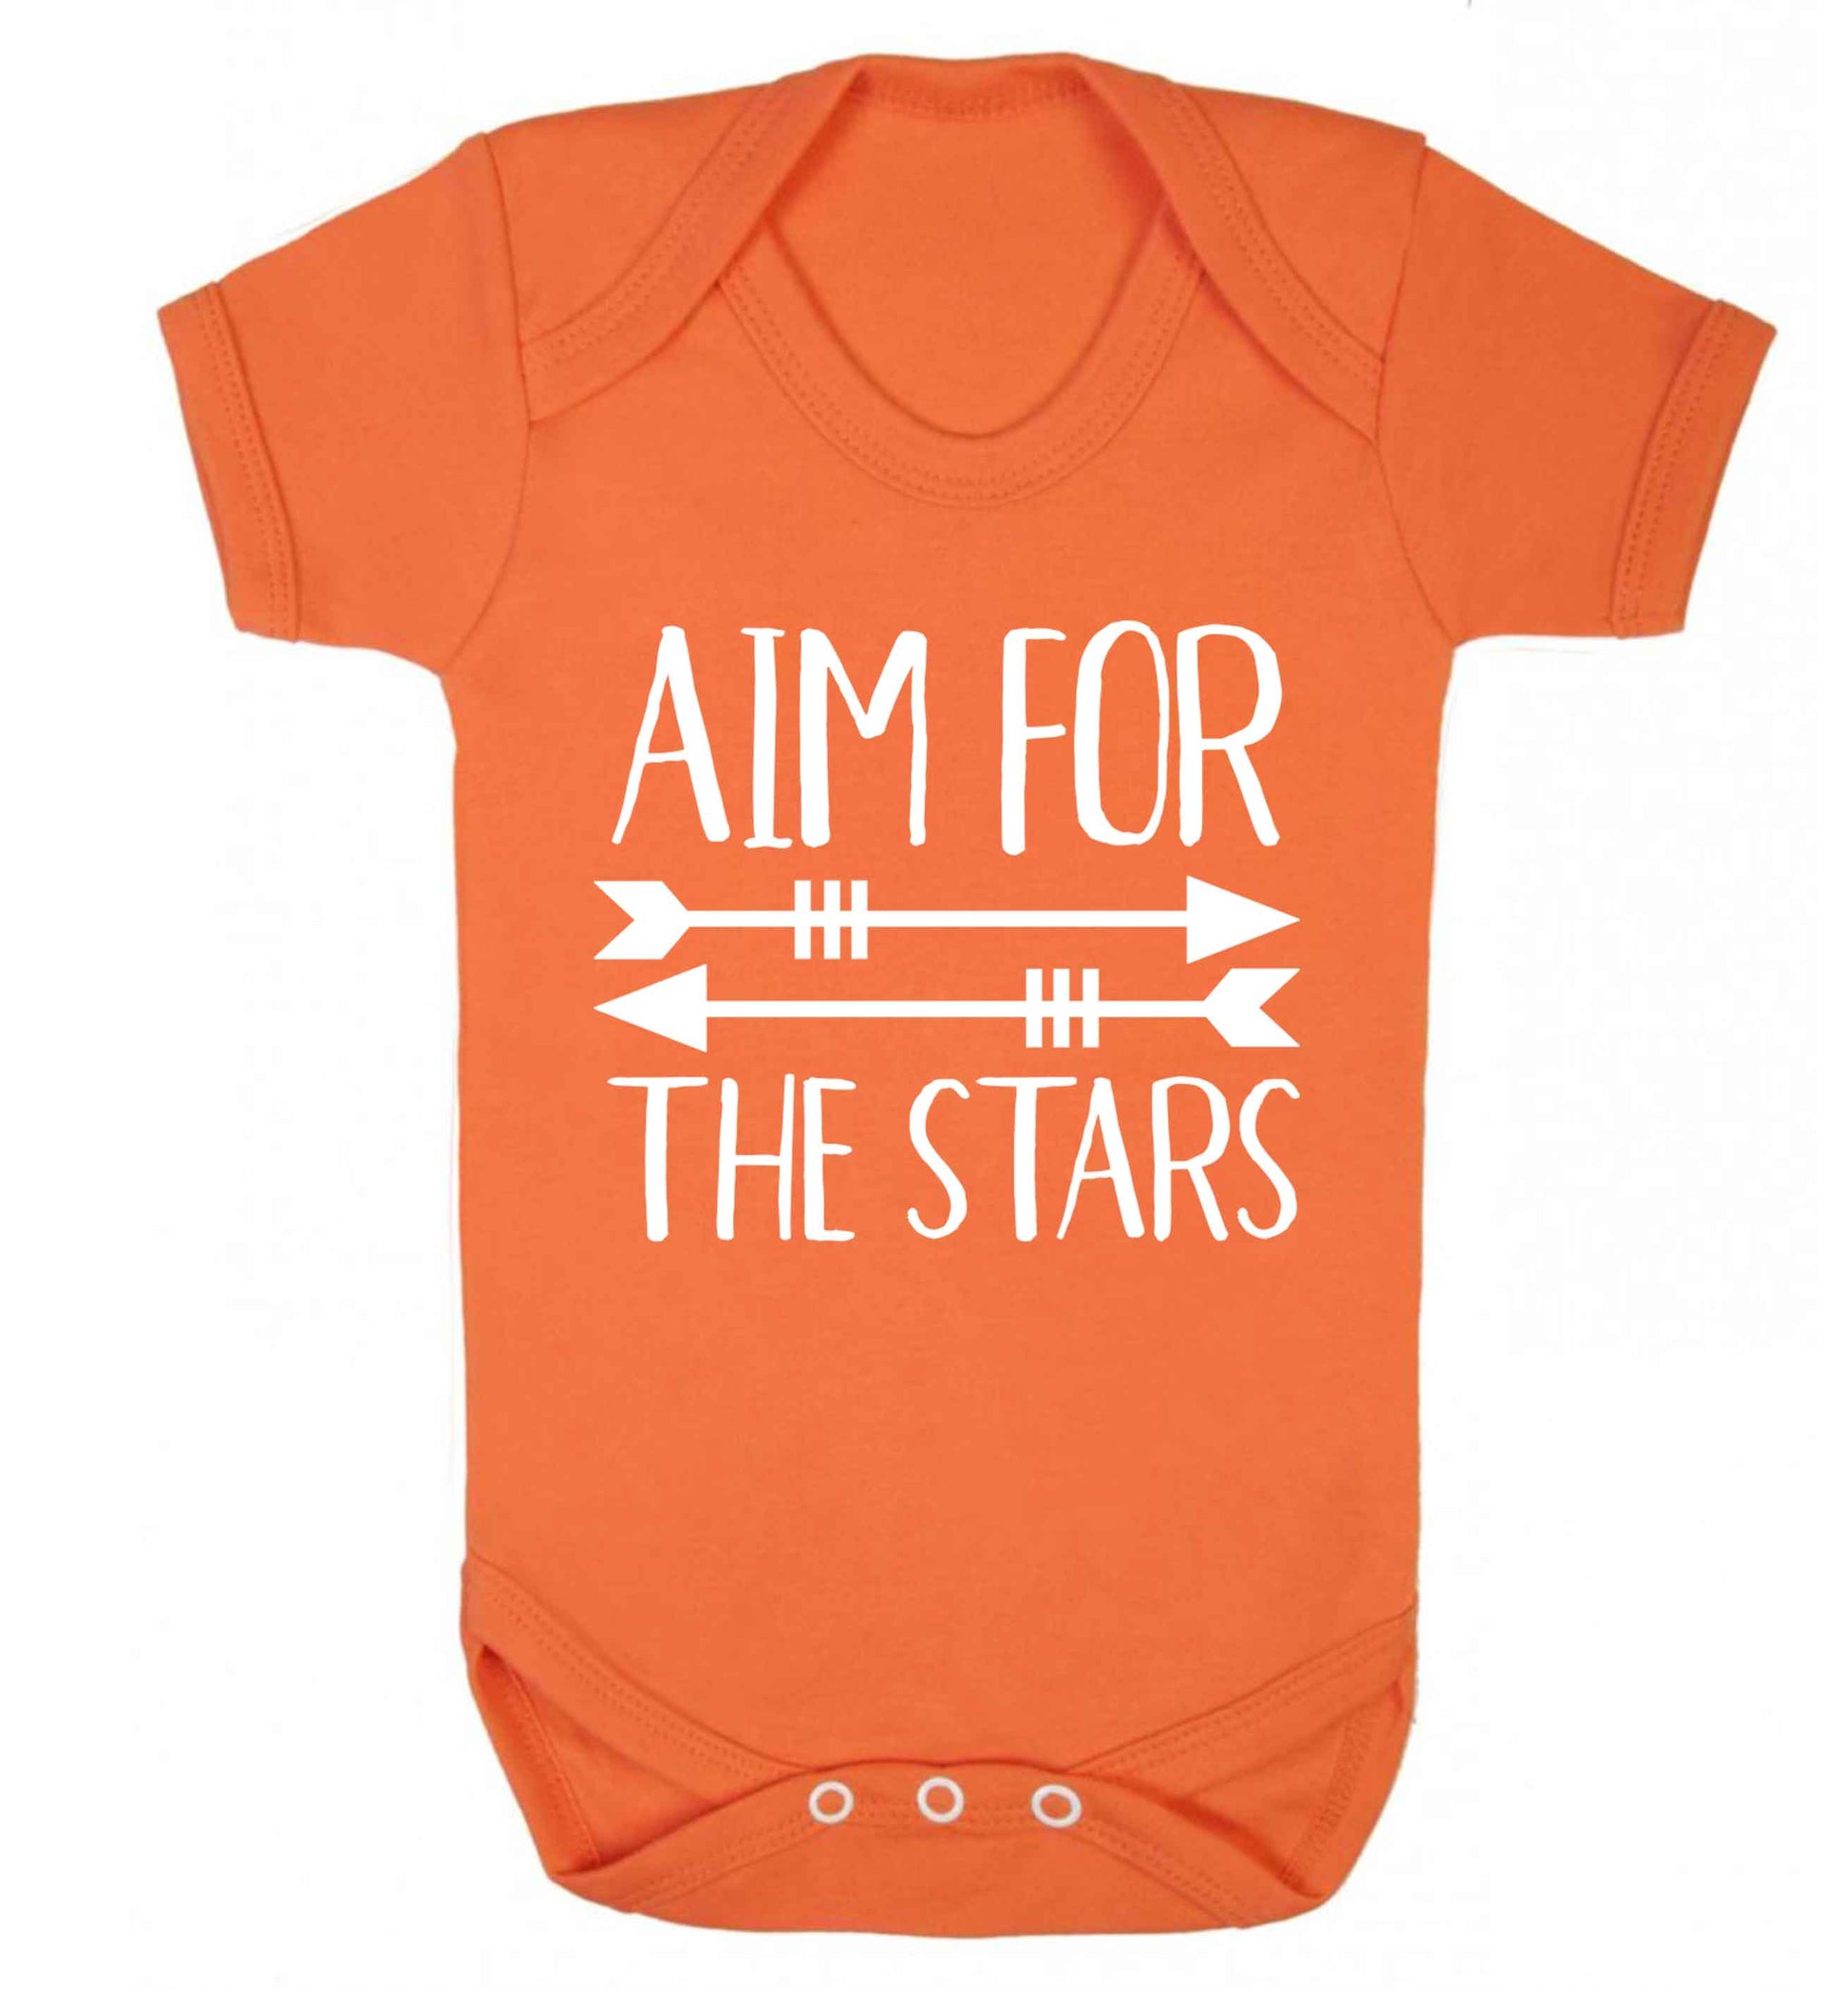 Aim for the stars Baby Vest orange 18-24 months